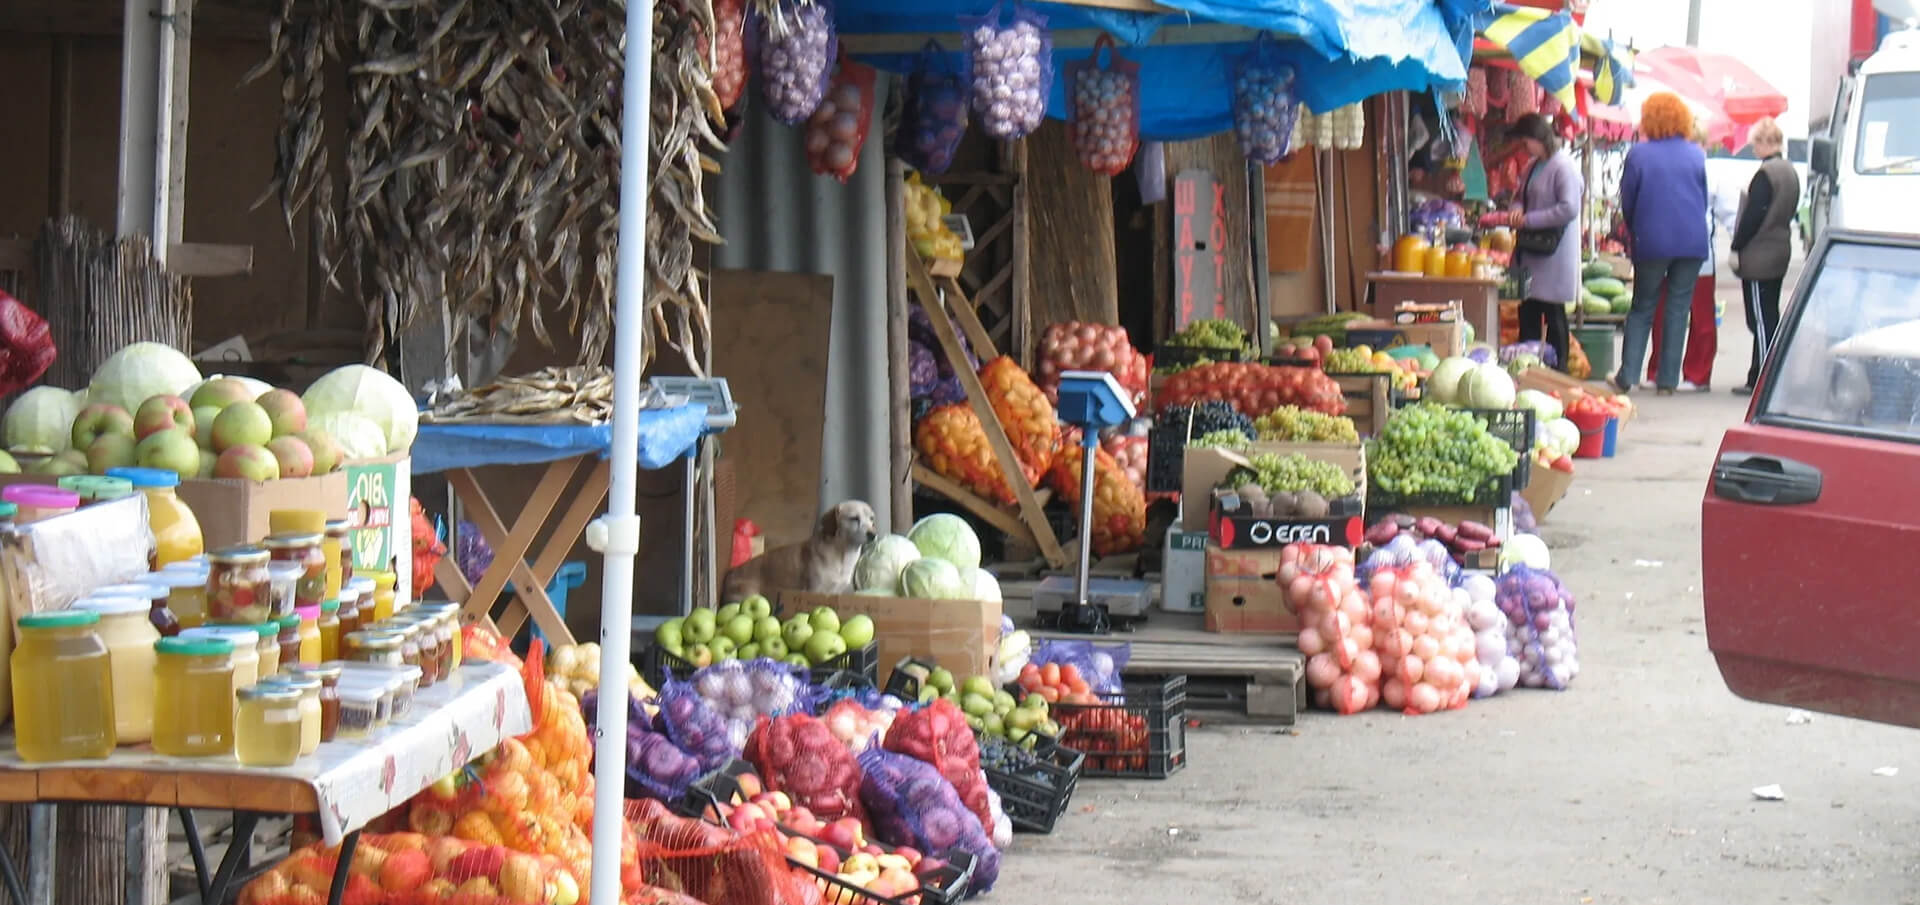 Fruit market on the road side